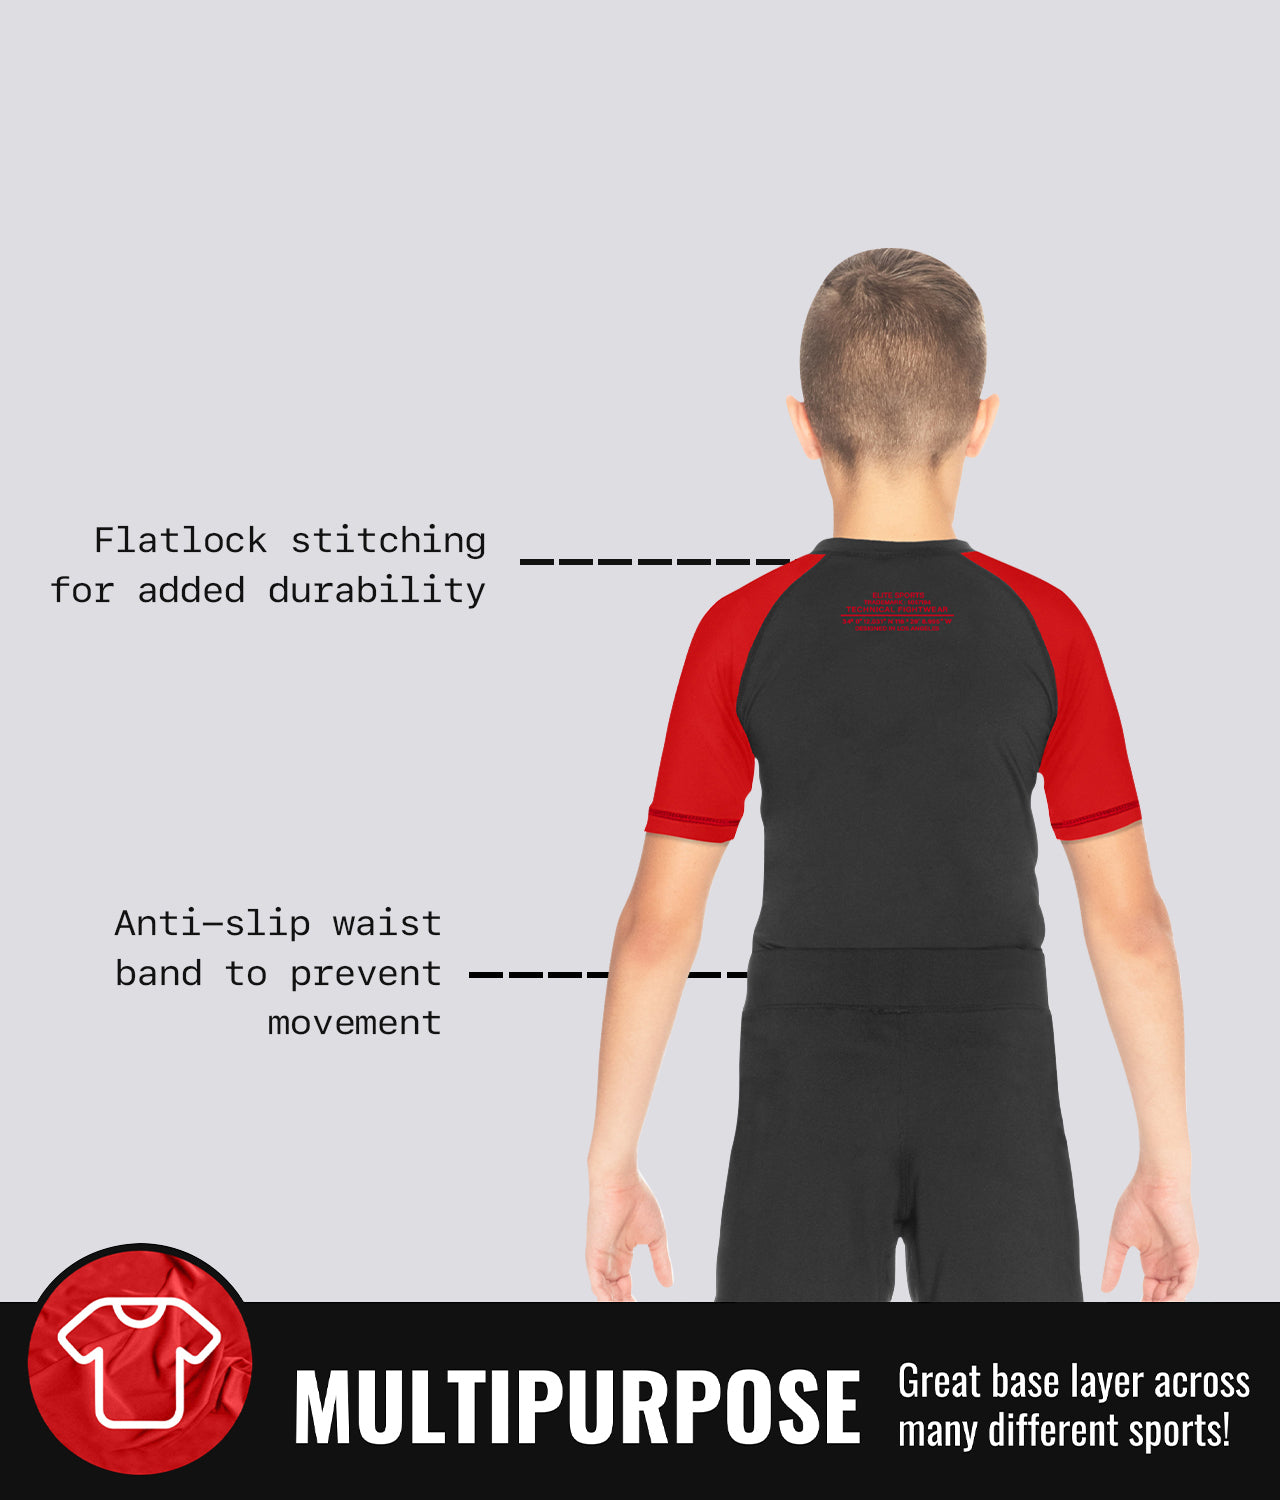 Elite Sports Kids' Standard Red Short Sleeve Wrestling Rash Guard